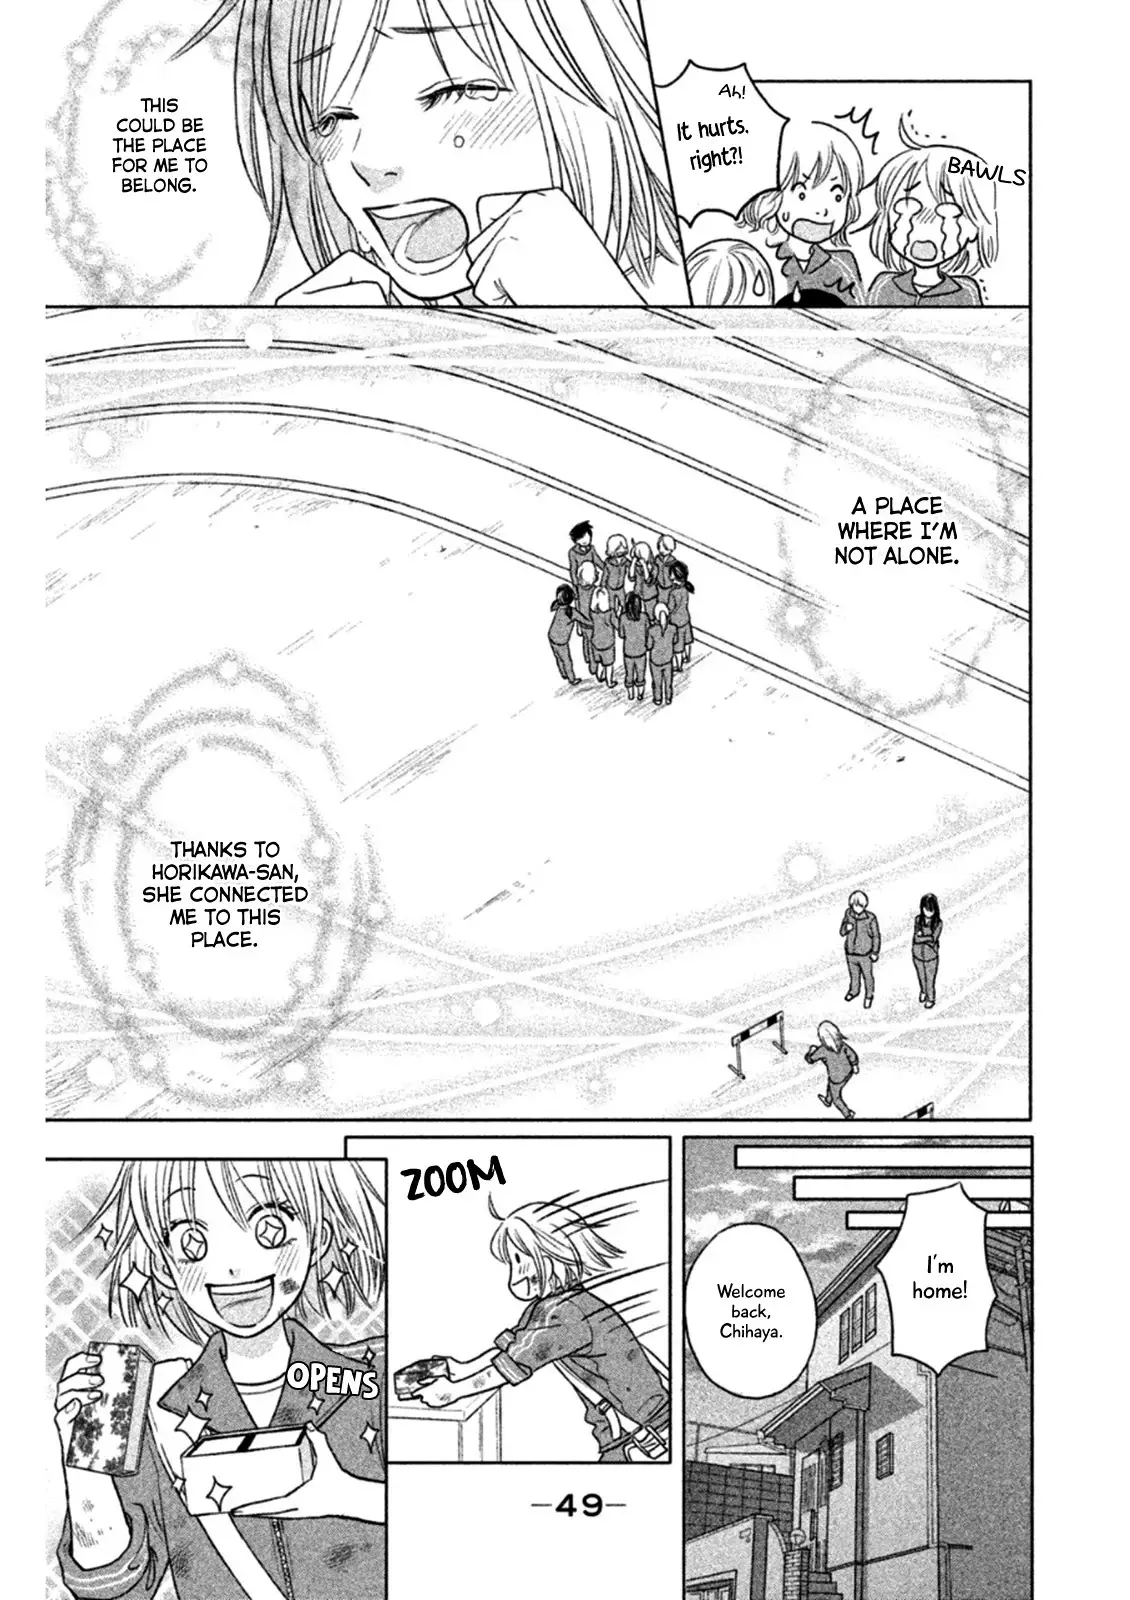 Chihayafuru: Middle School Arc - 2 page 18